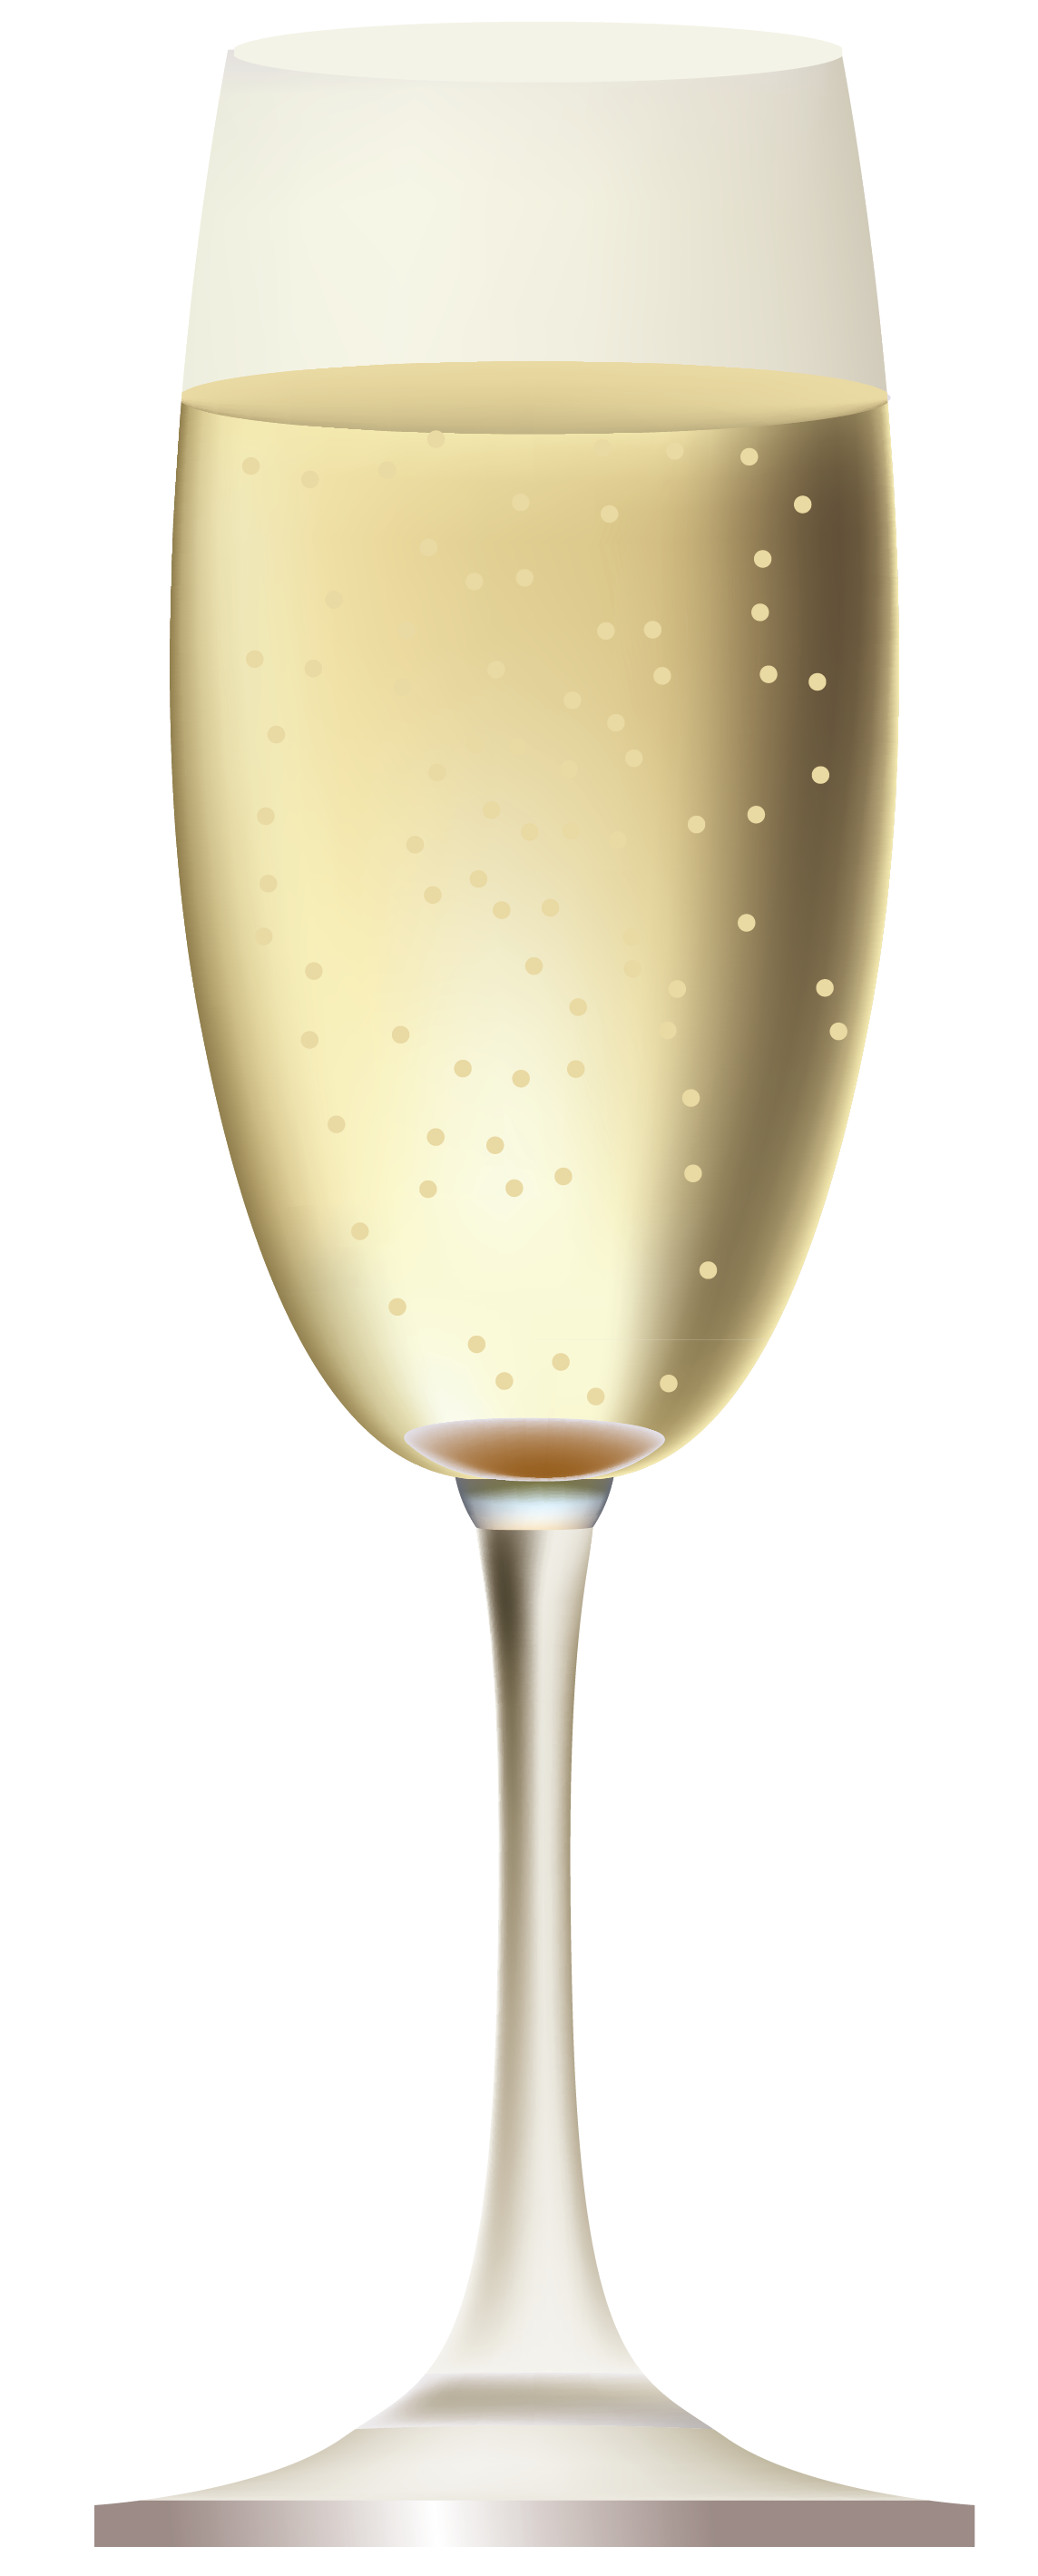 clipart champagne glass - photo #46